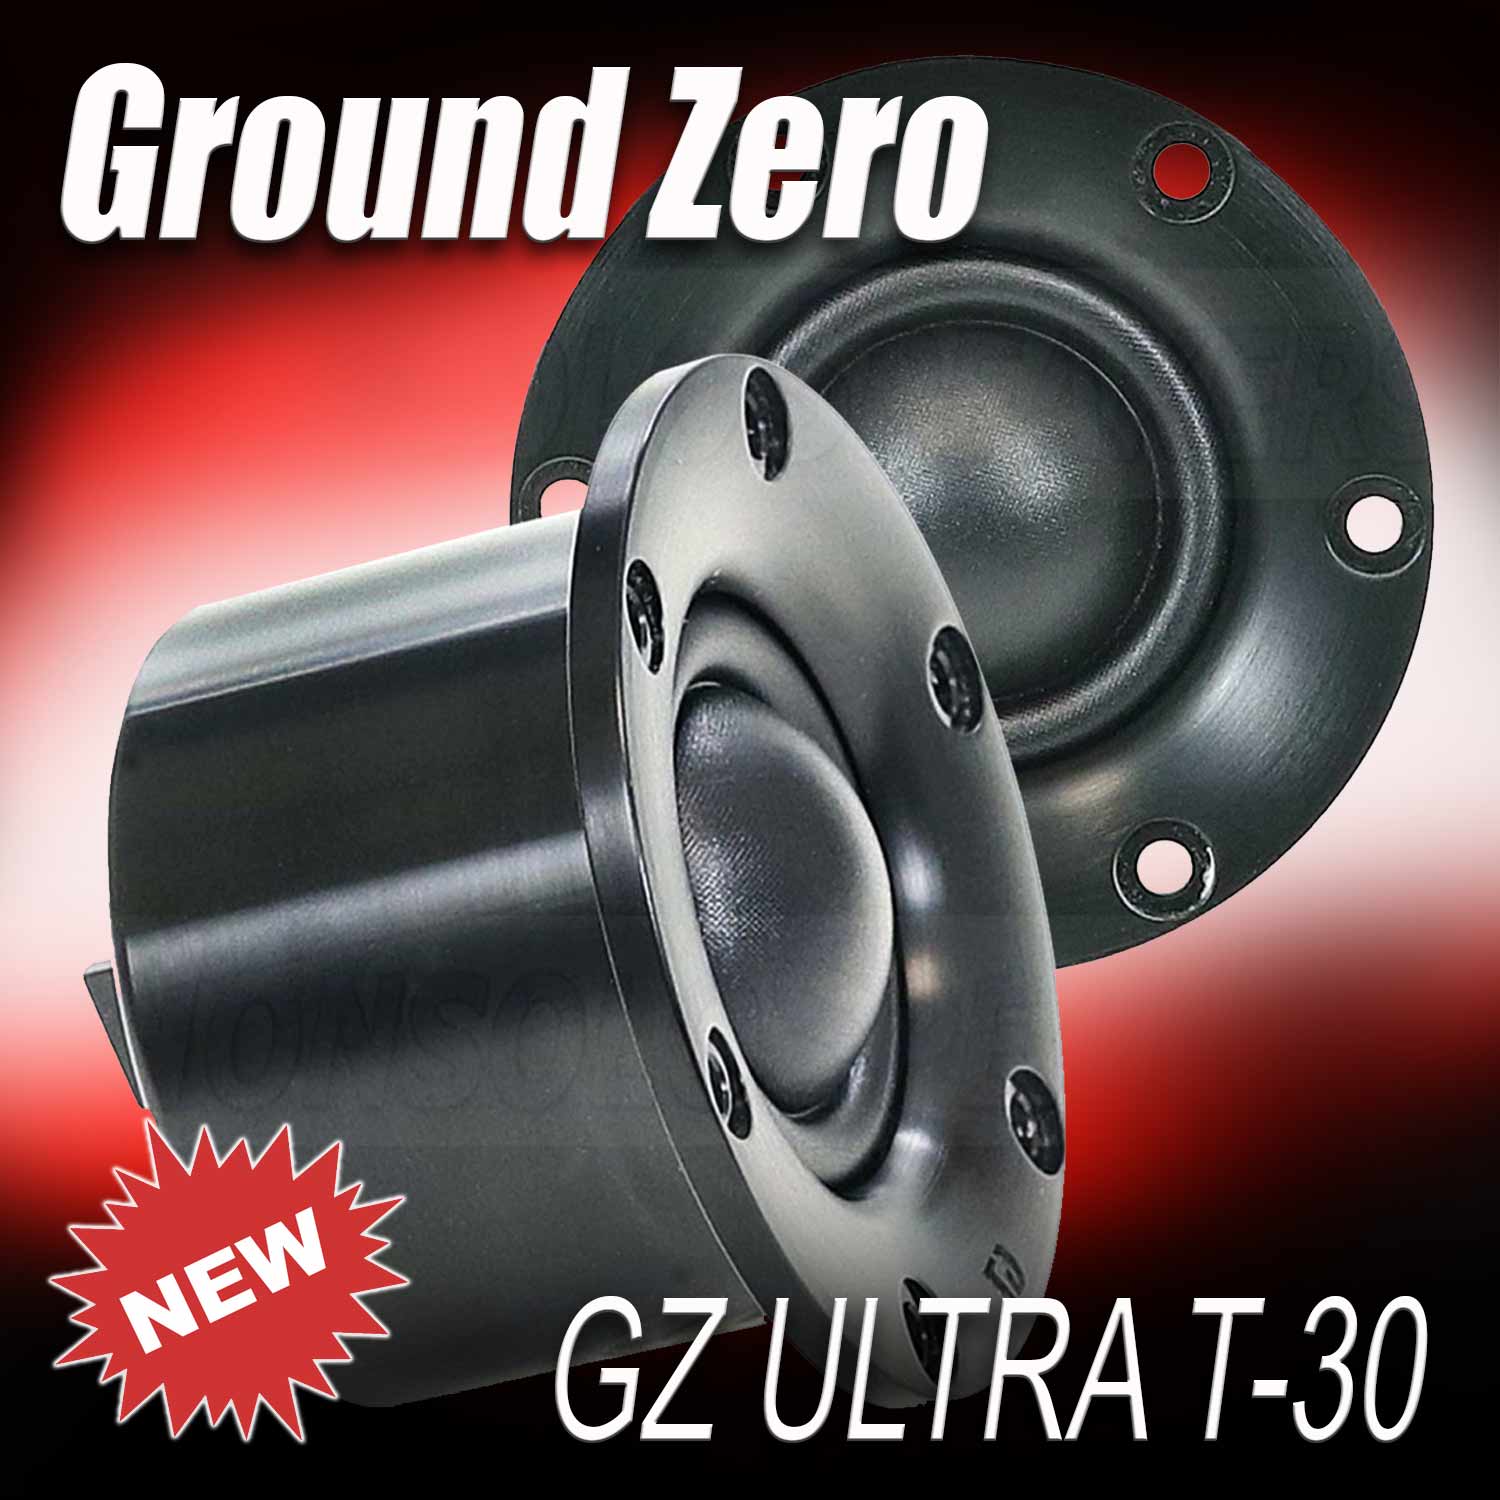 Ground zero ultra t30